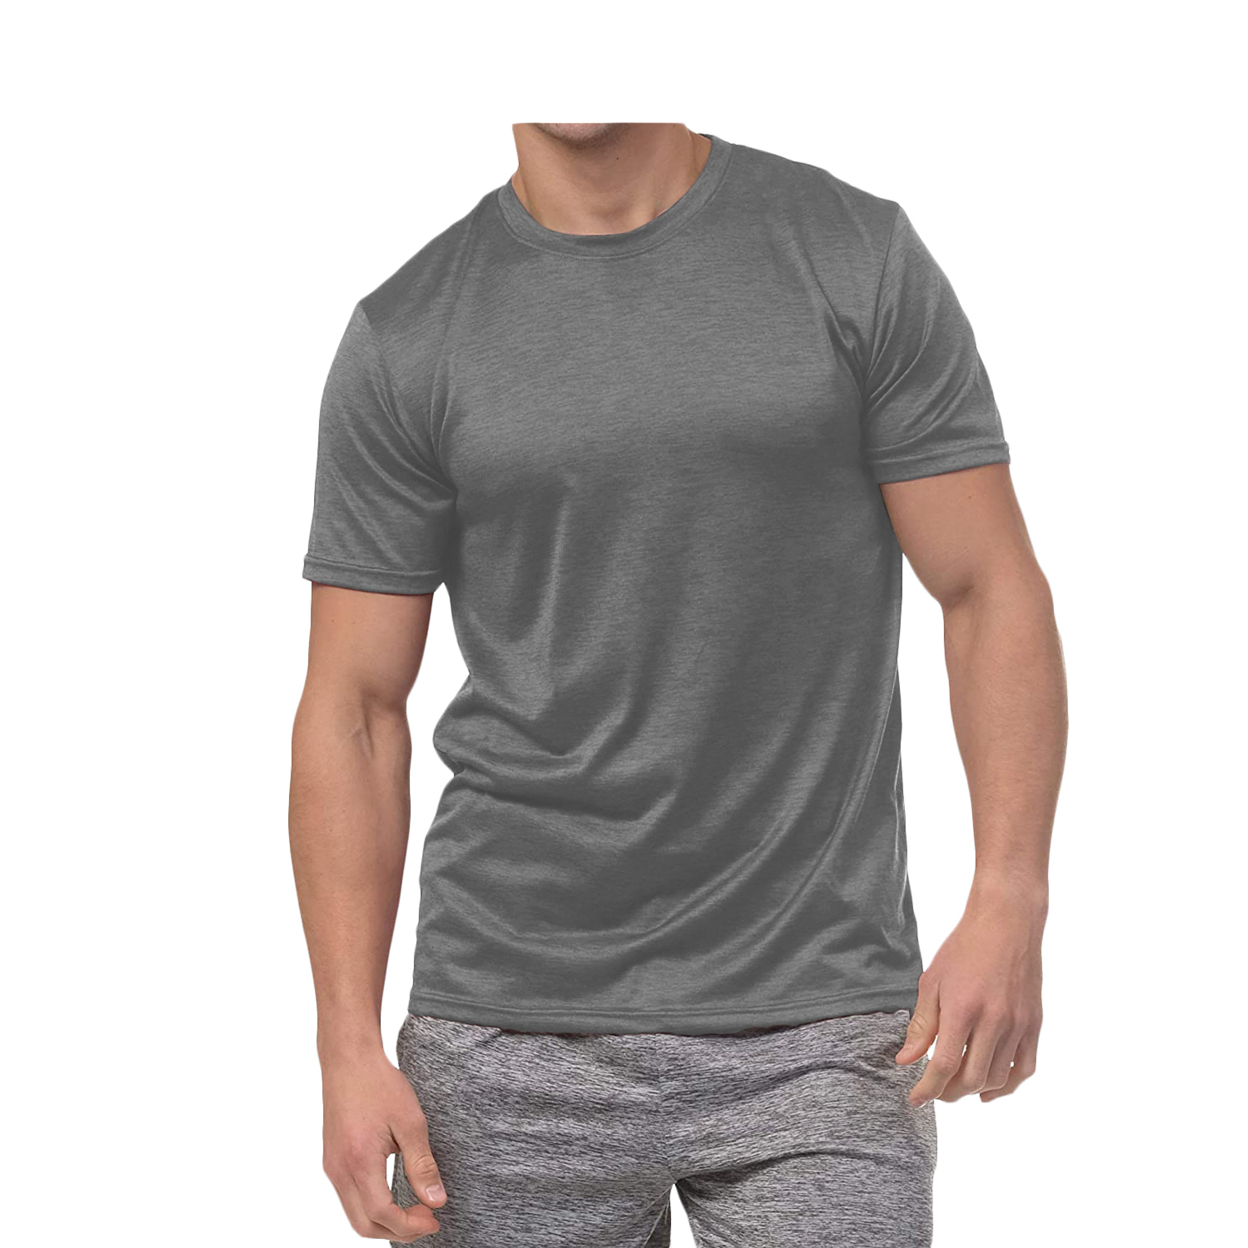 5-Pack: Men's Active Moisture Wicking Dry Fit Crew Neck Shirts - Medium